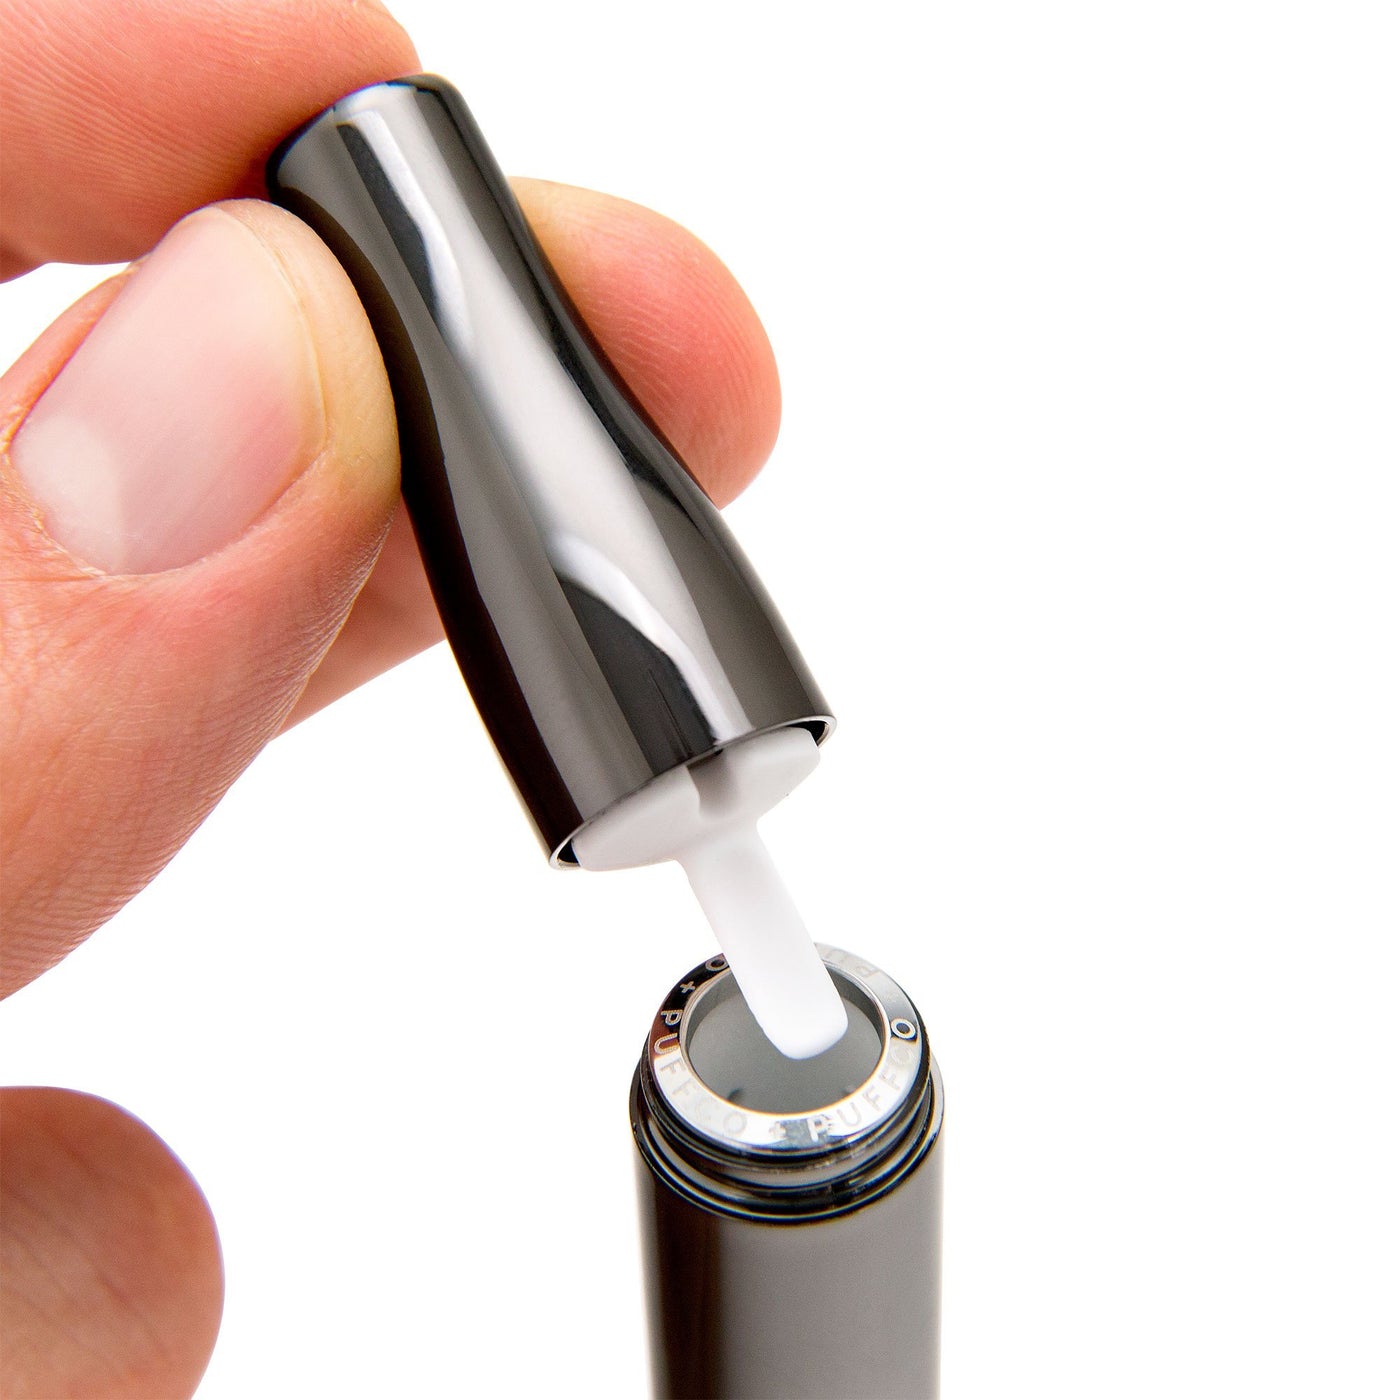 Puffco New Plus wax vape pen   - Trusted online retailer